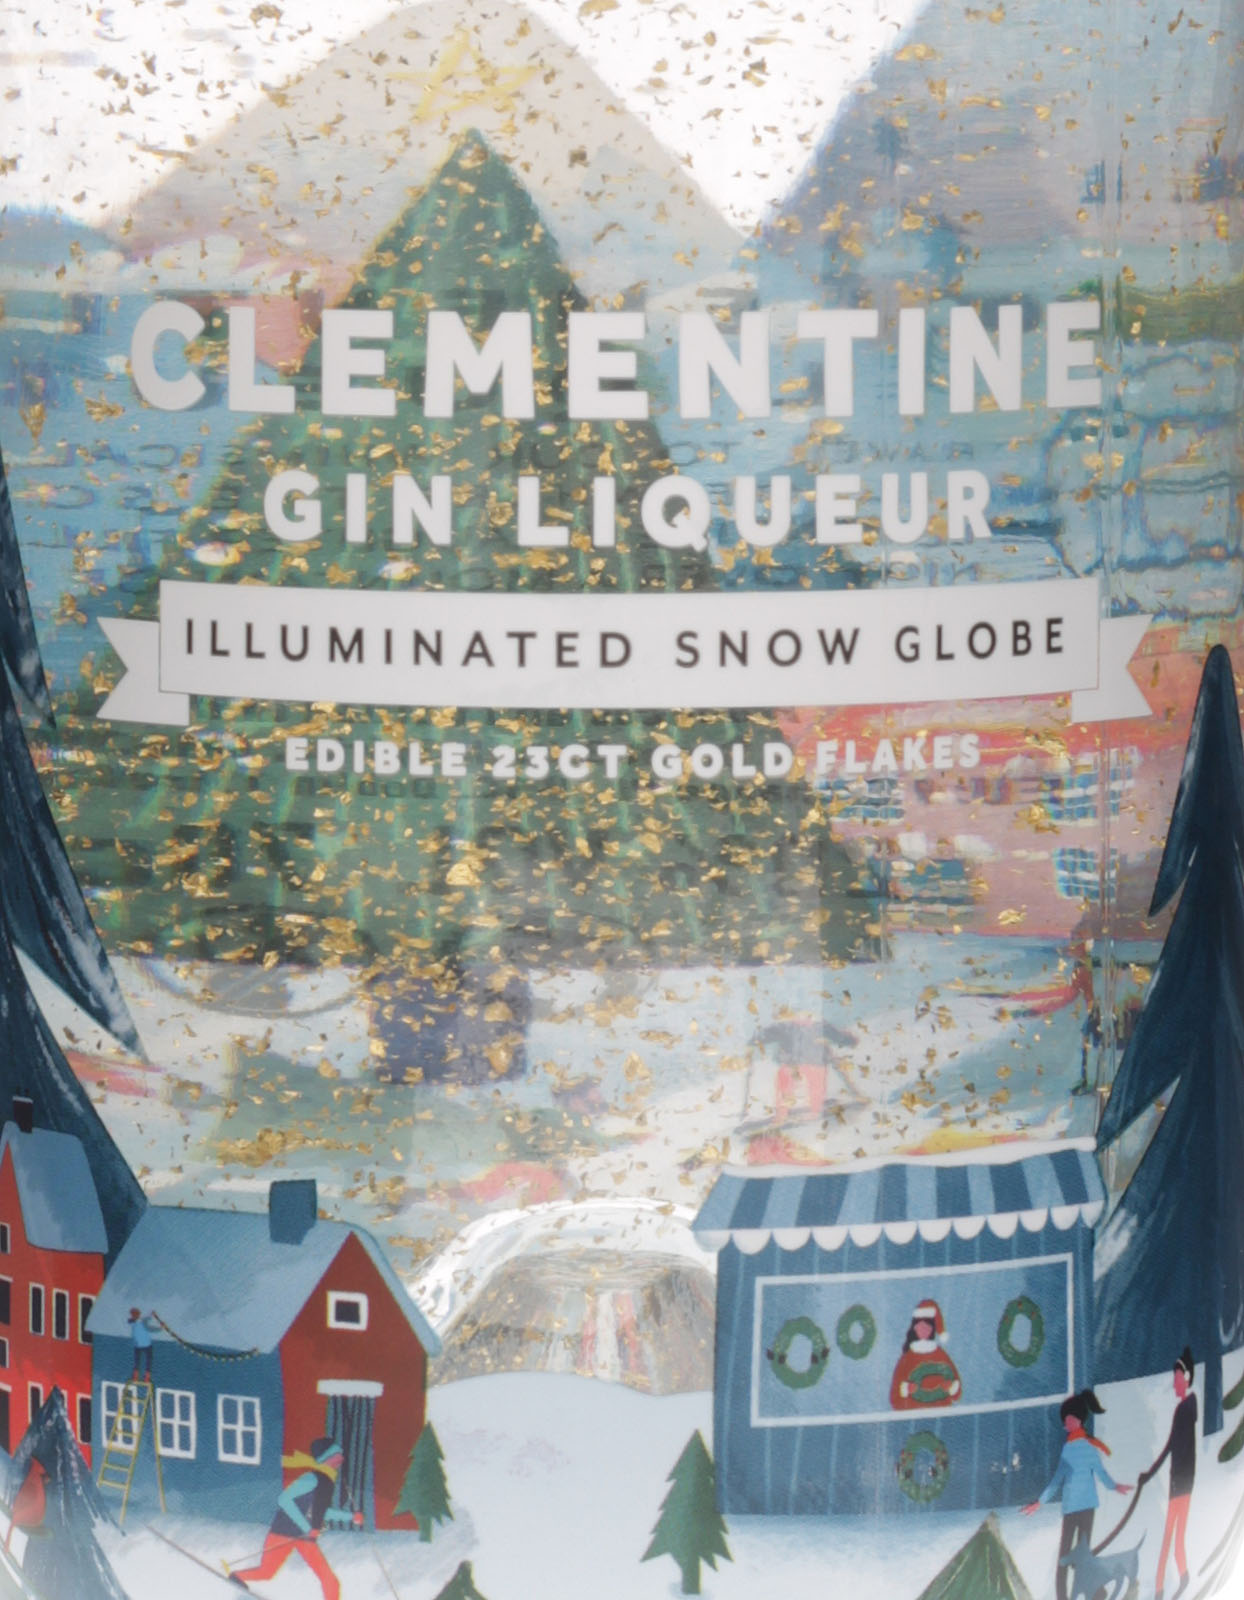 Liqueur Snow Clementine Gin Shop Illuminated Globe k im